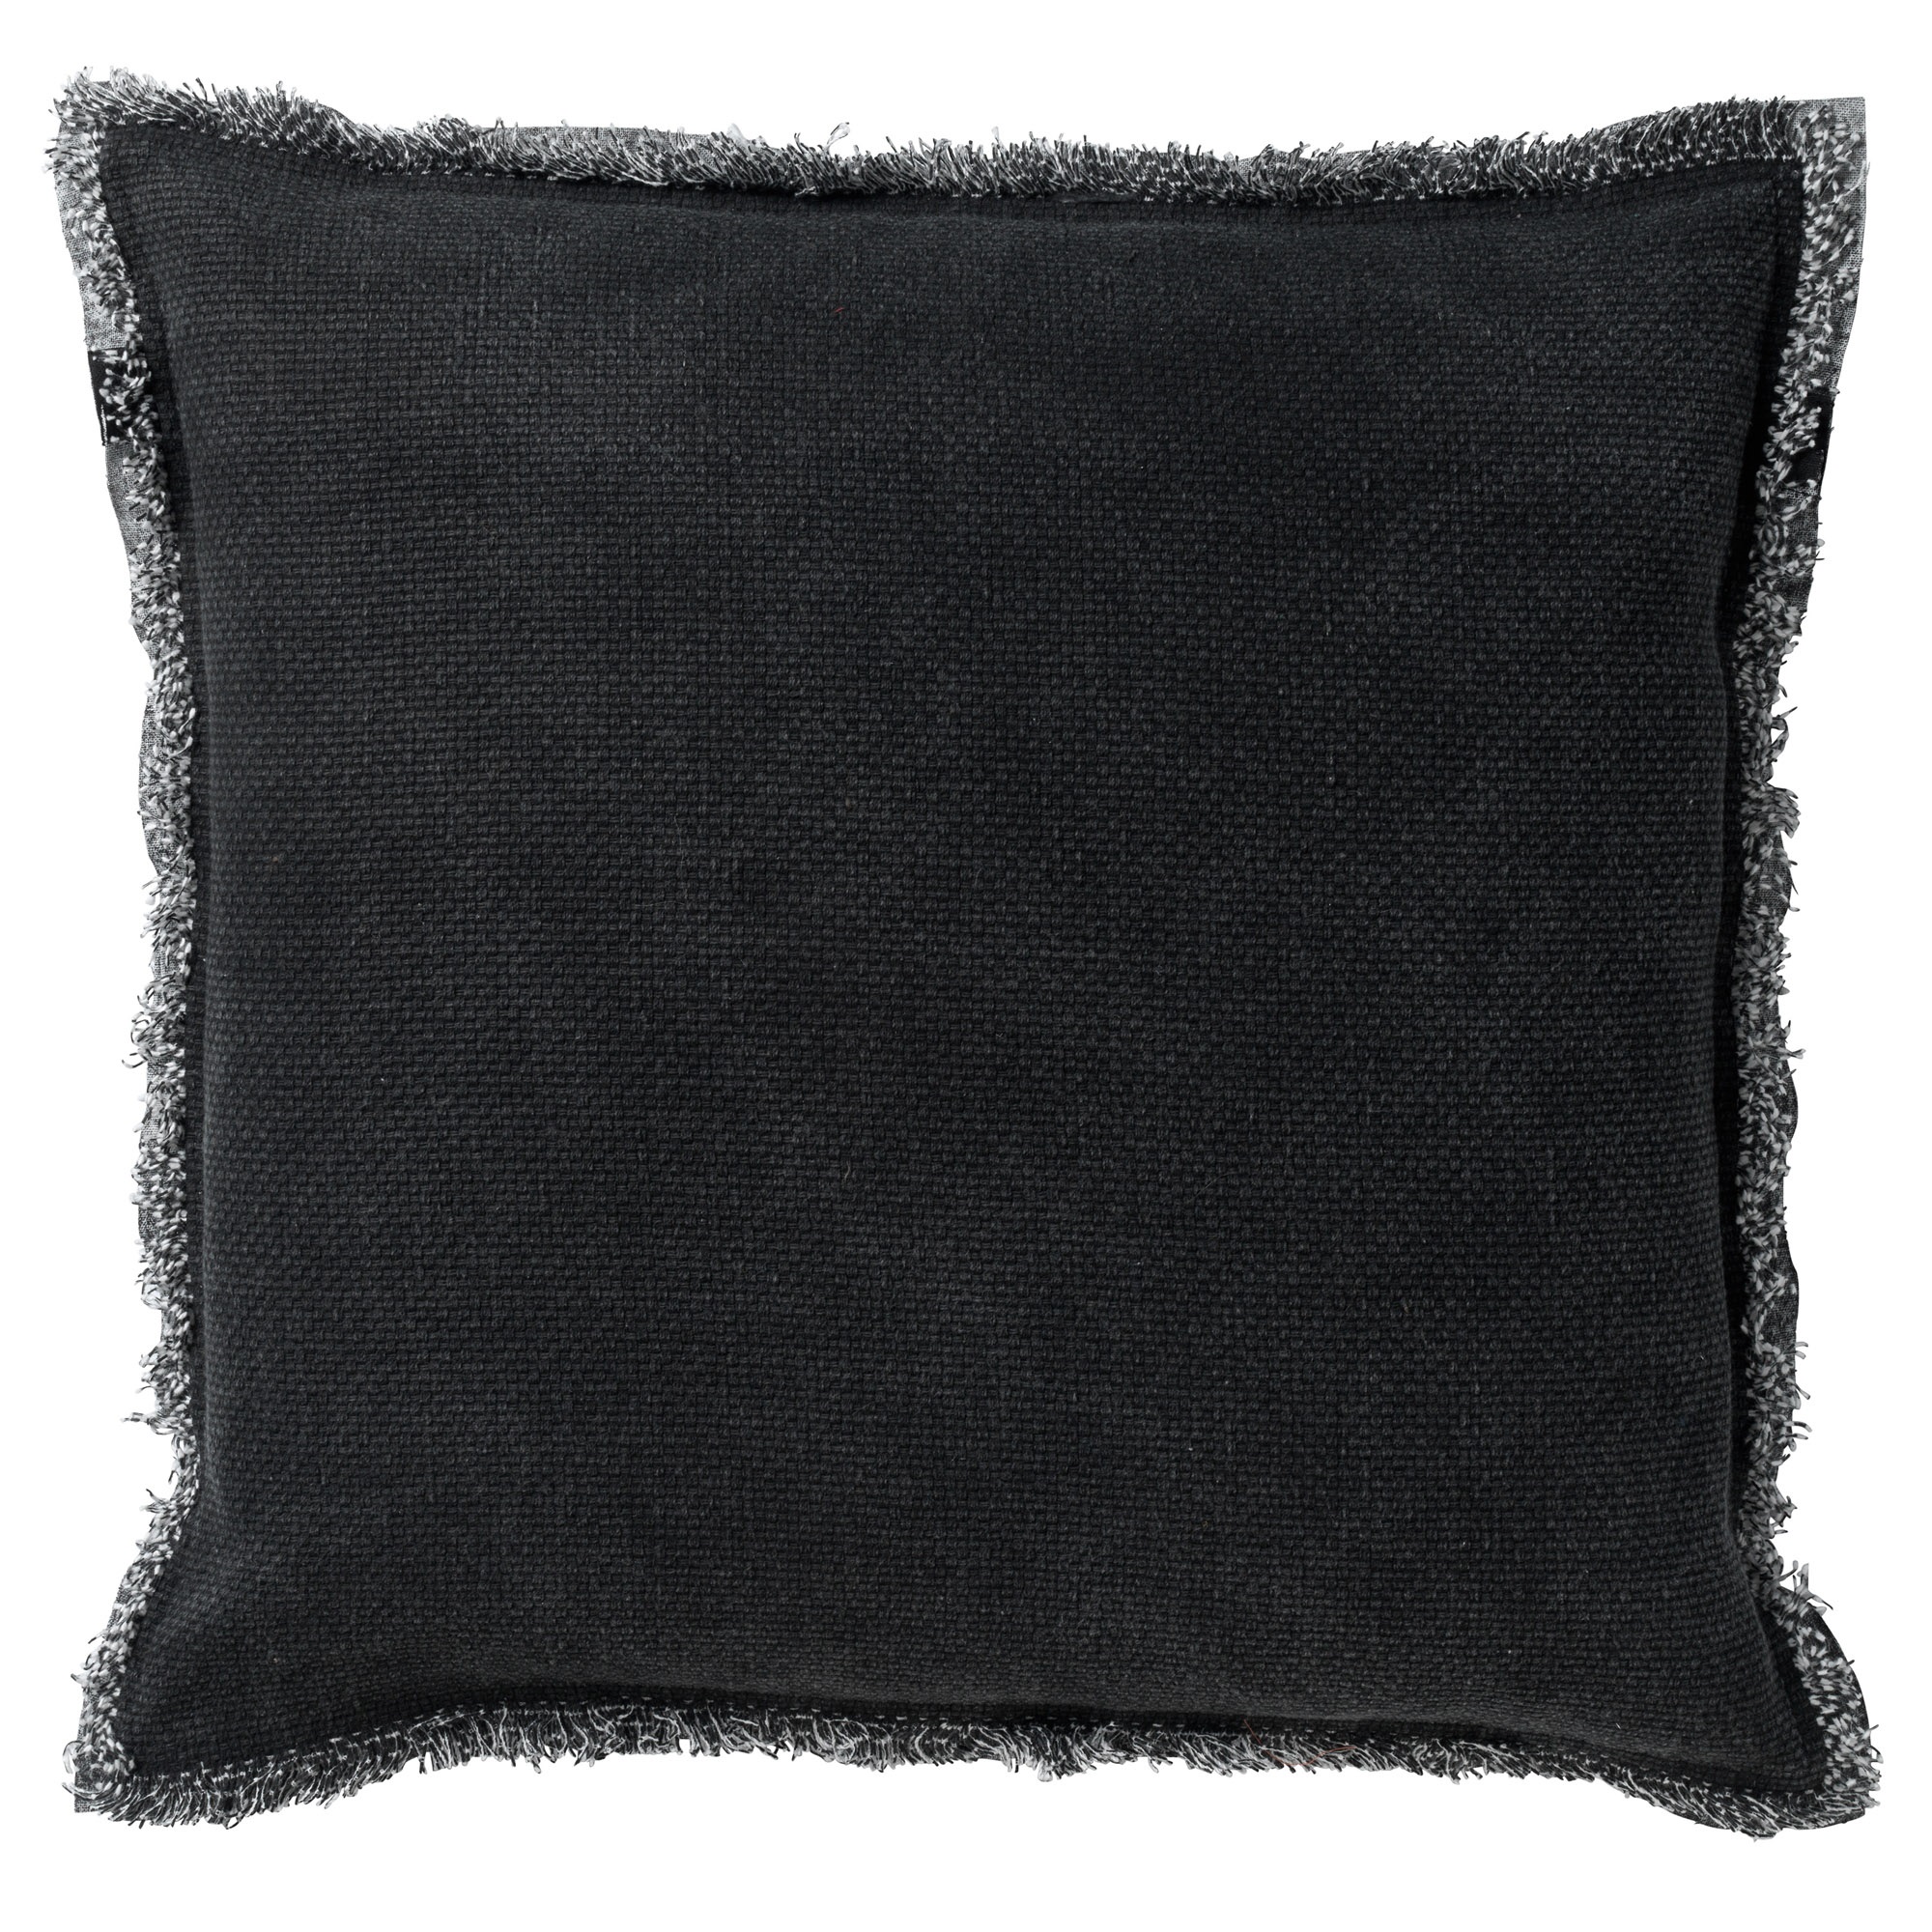 BURTO - Cushion 60x60 cm Raven - black 